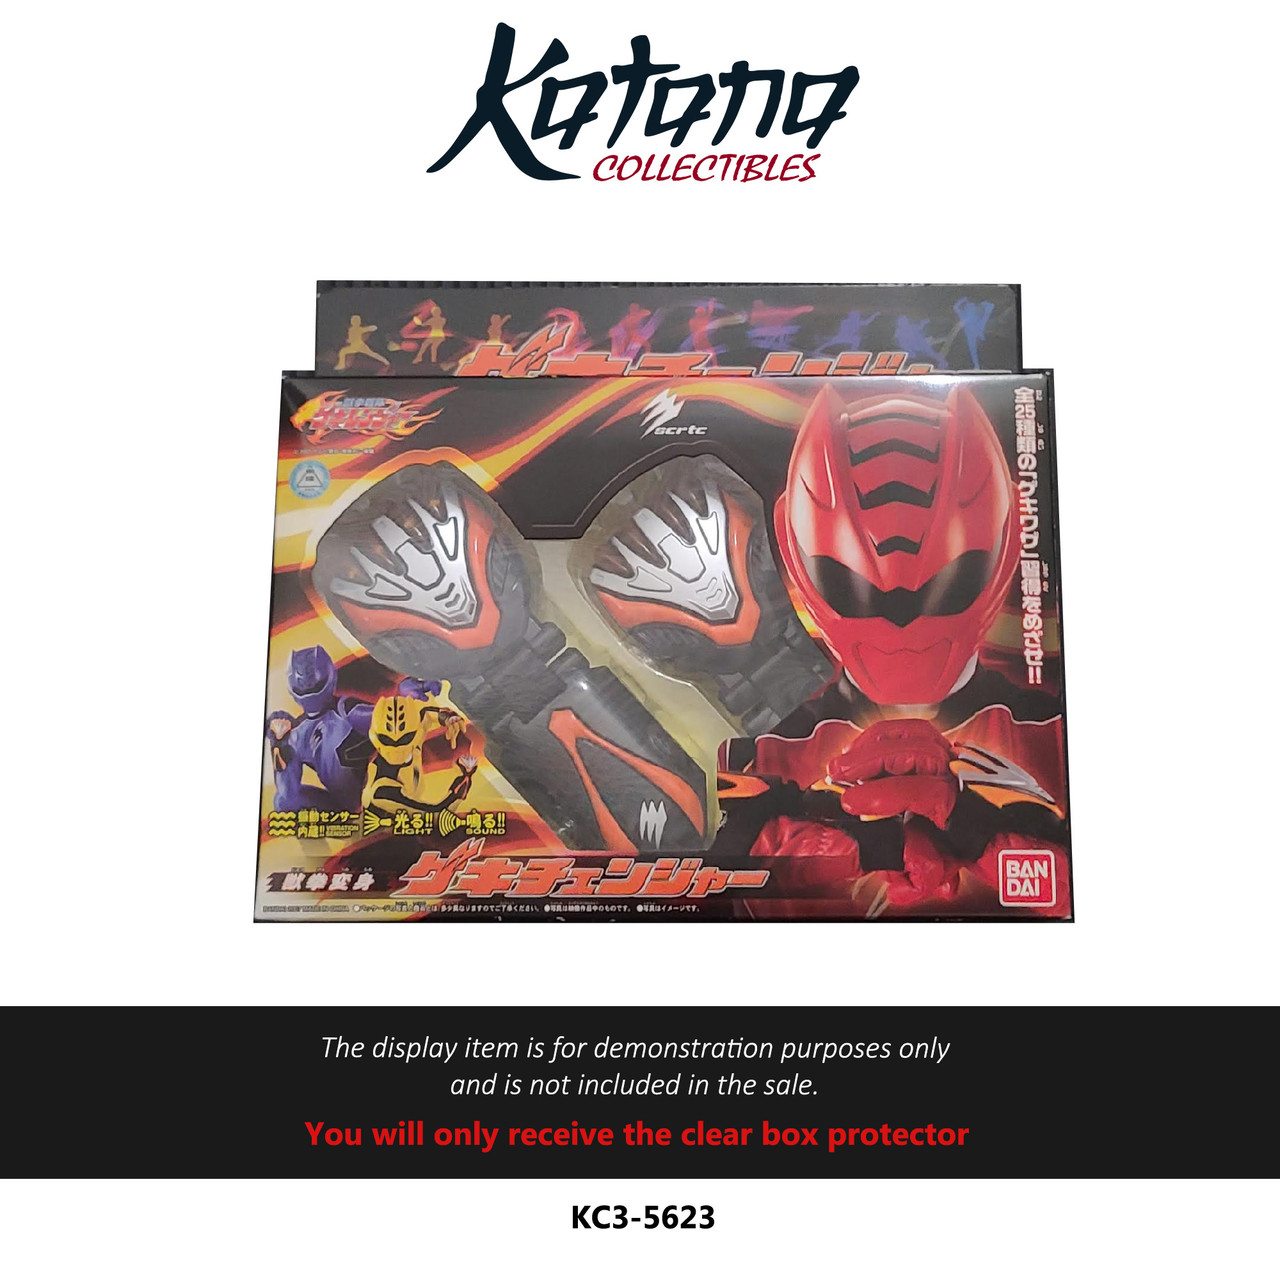 Katana Collectibles Protector For Gekiranger DX Gekichanger Power Rangers